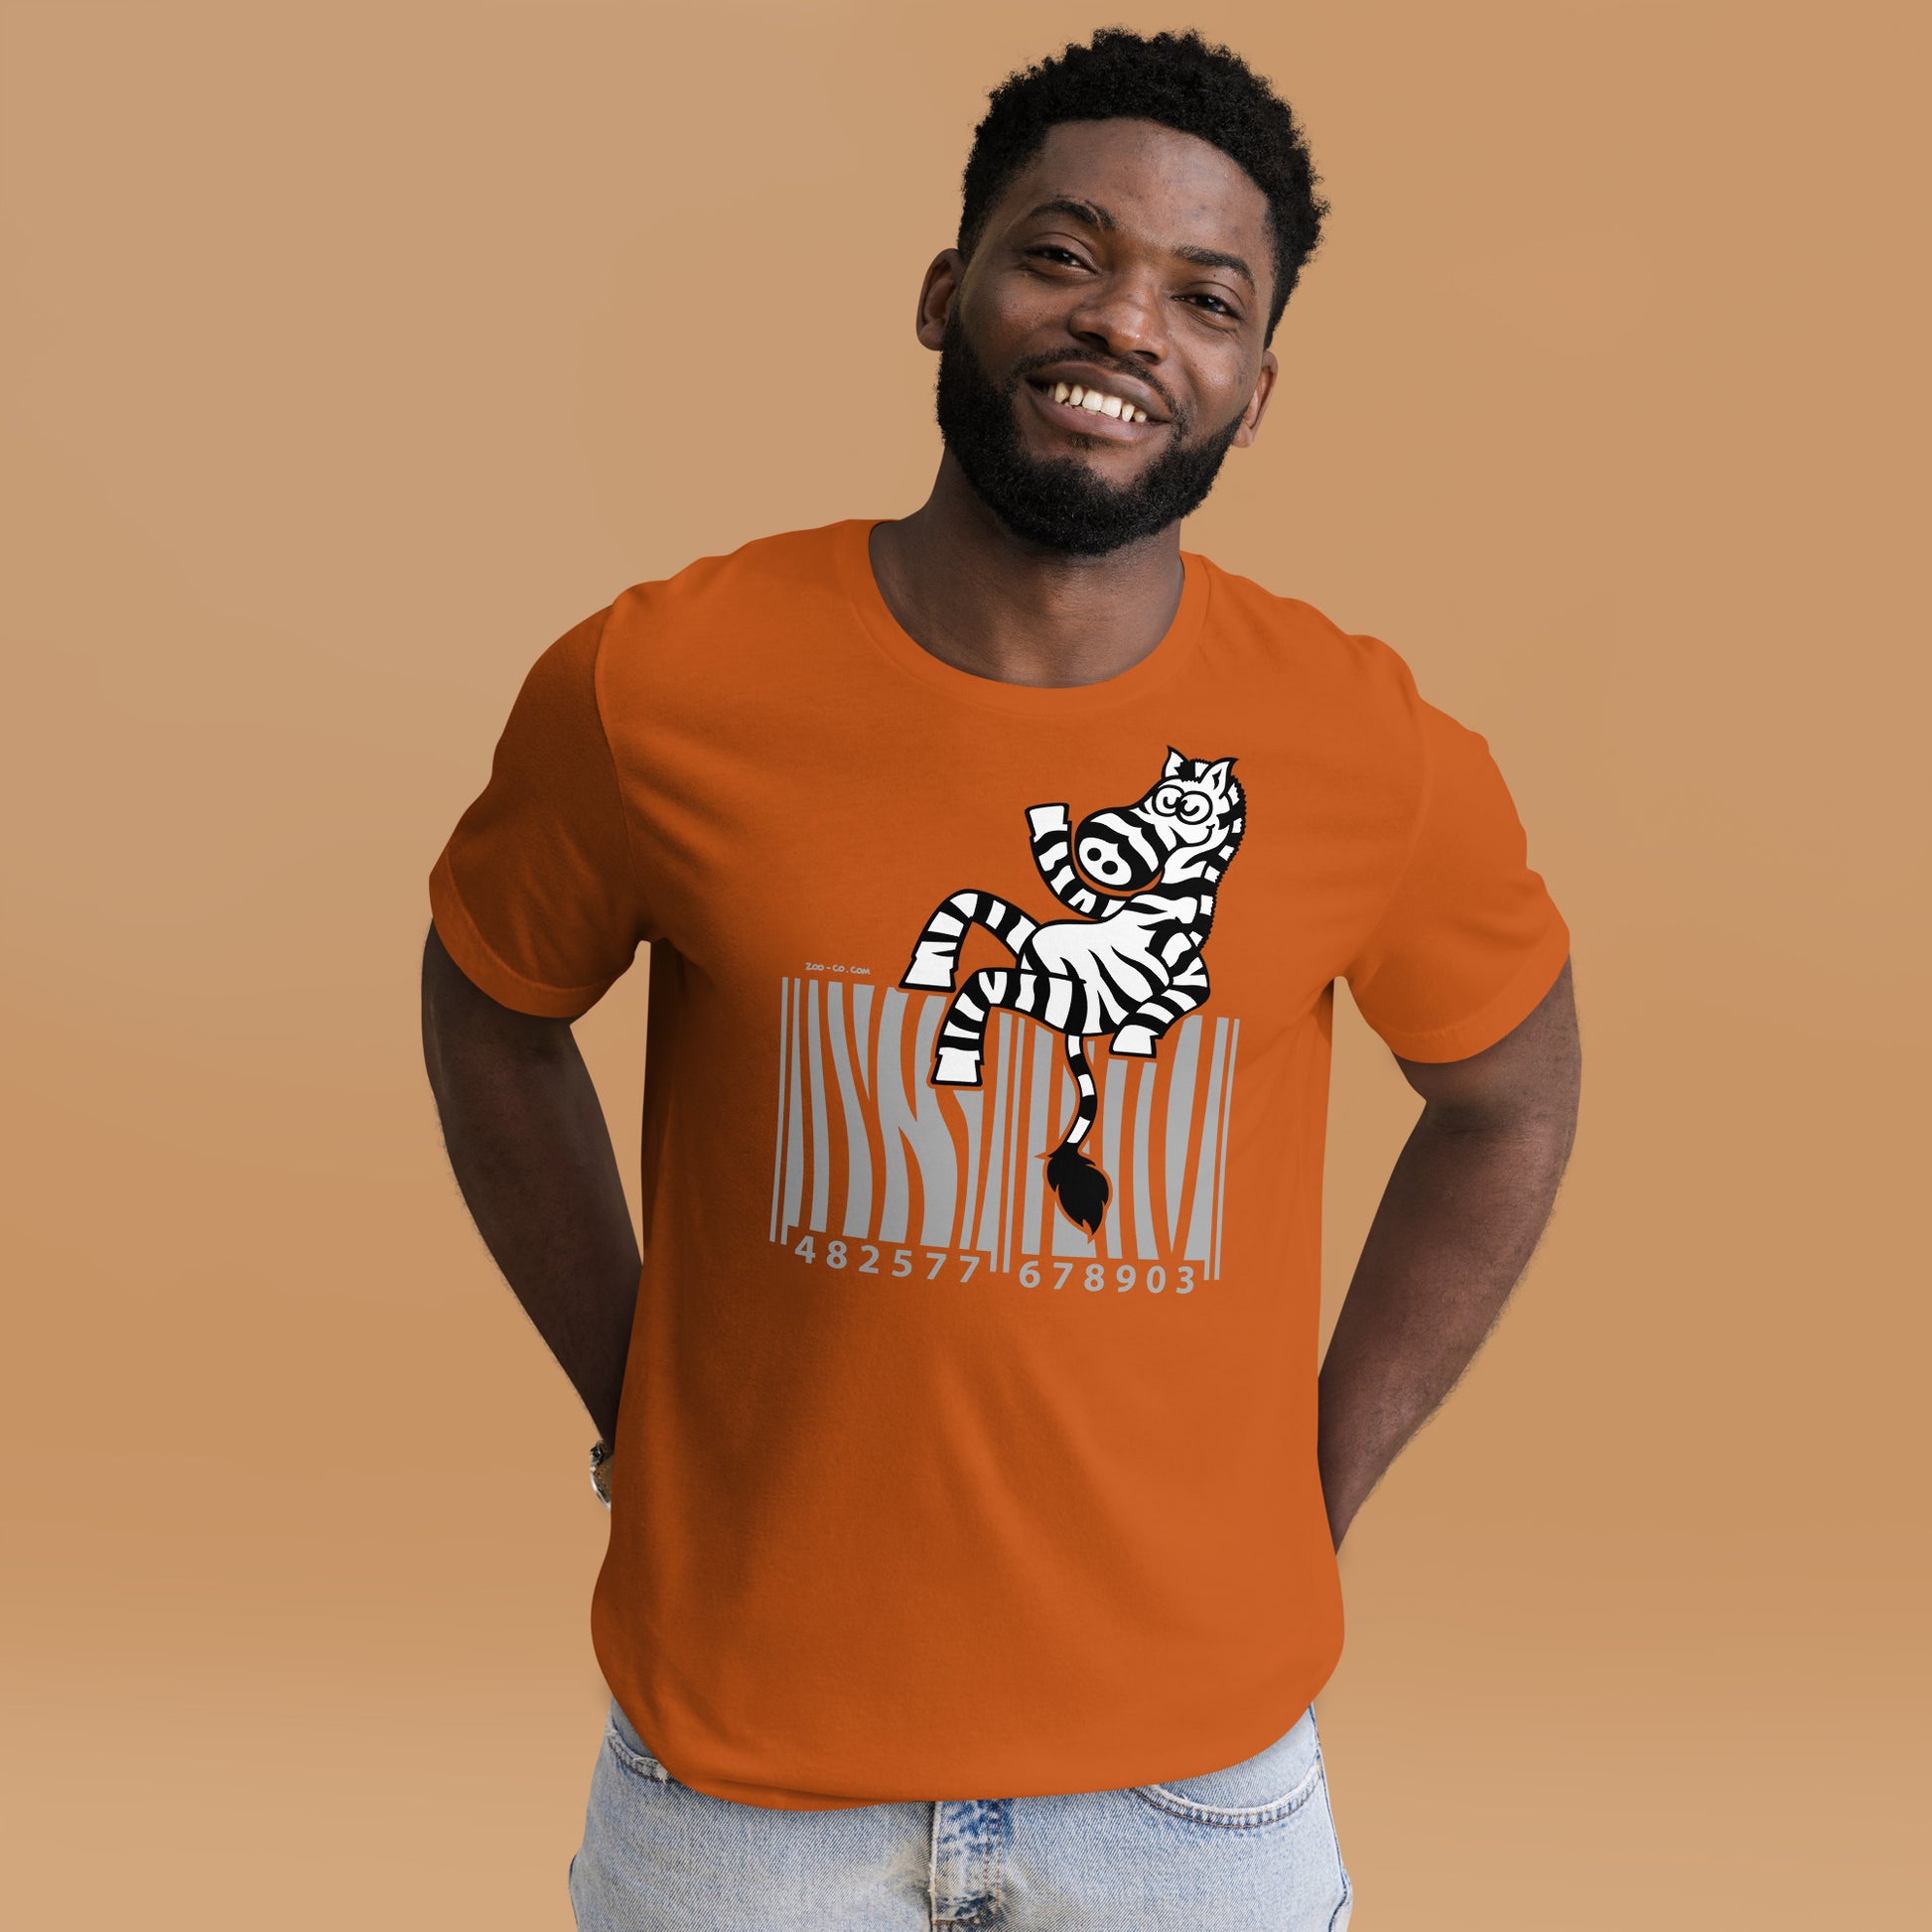 Creative barcode in waving zebra mode Unisex t-shirt. Man wearing an Autumn color version. Front view